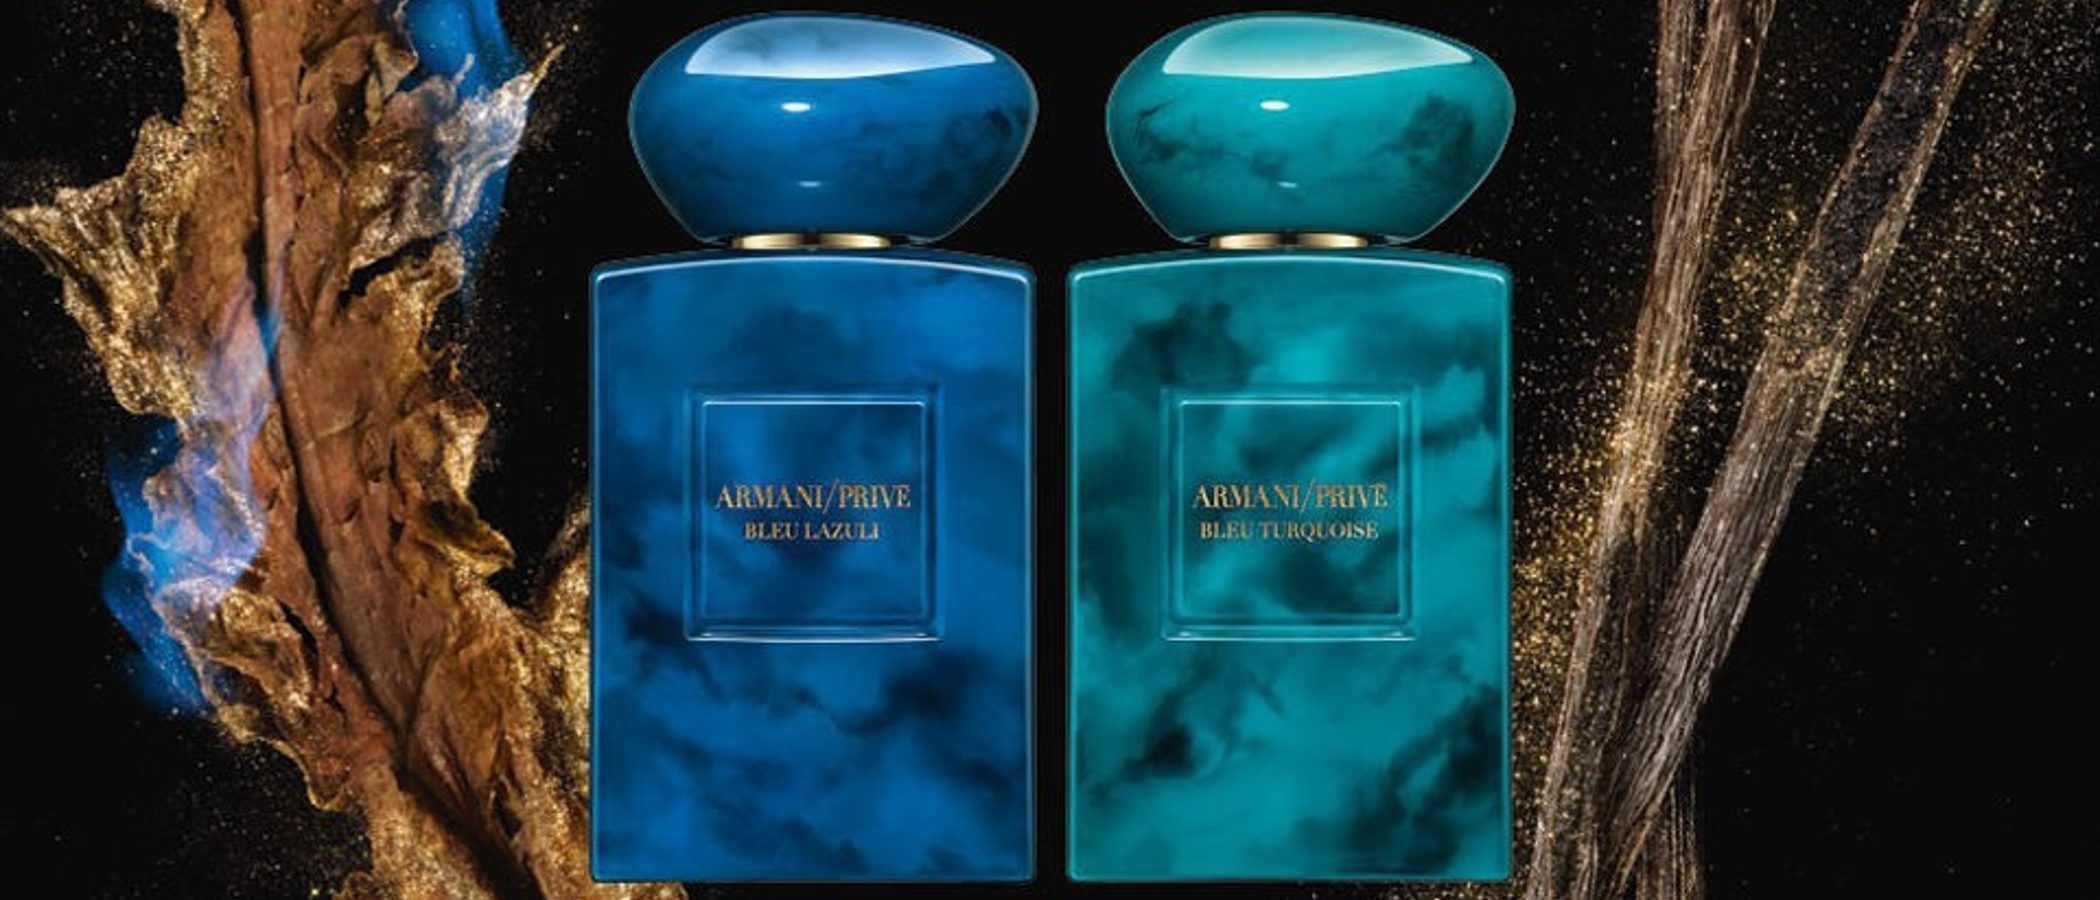 La India inspira a Armani Privé en sus dos nuevas fragancias: 'Bleu Lazuli' y 'Bleu Turquoise'